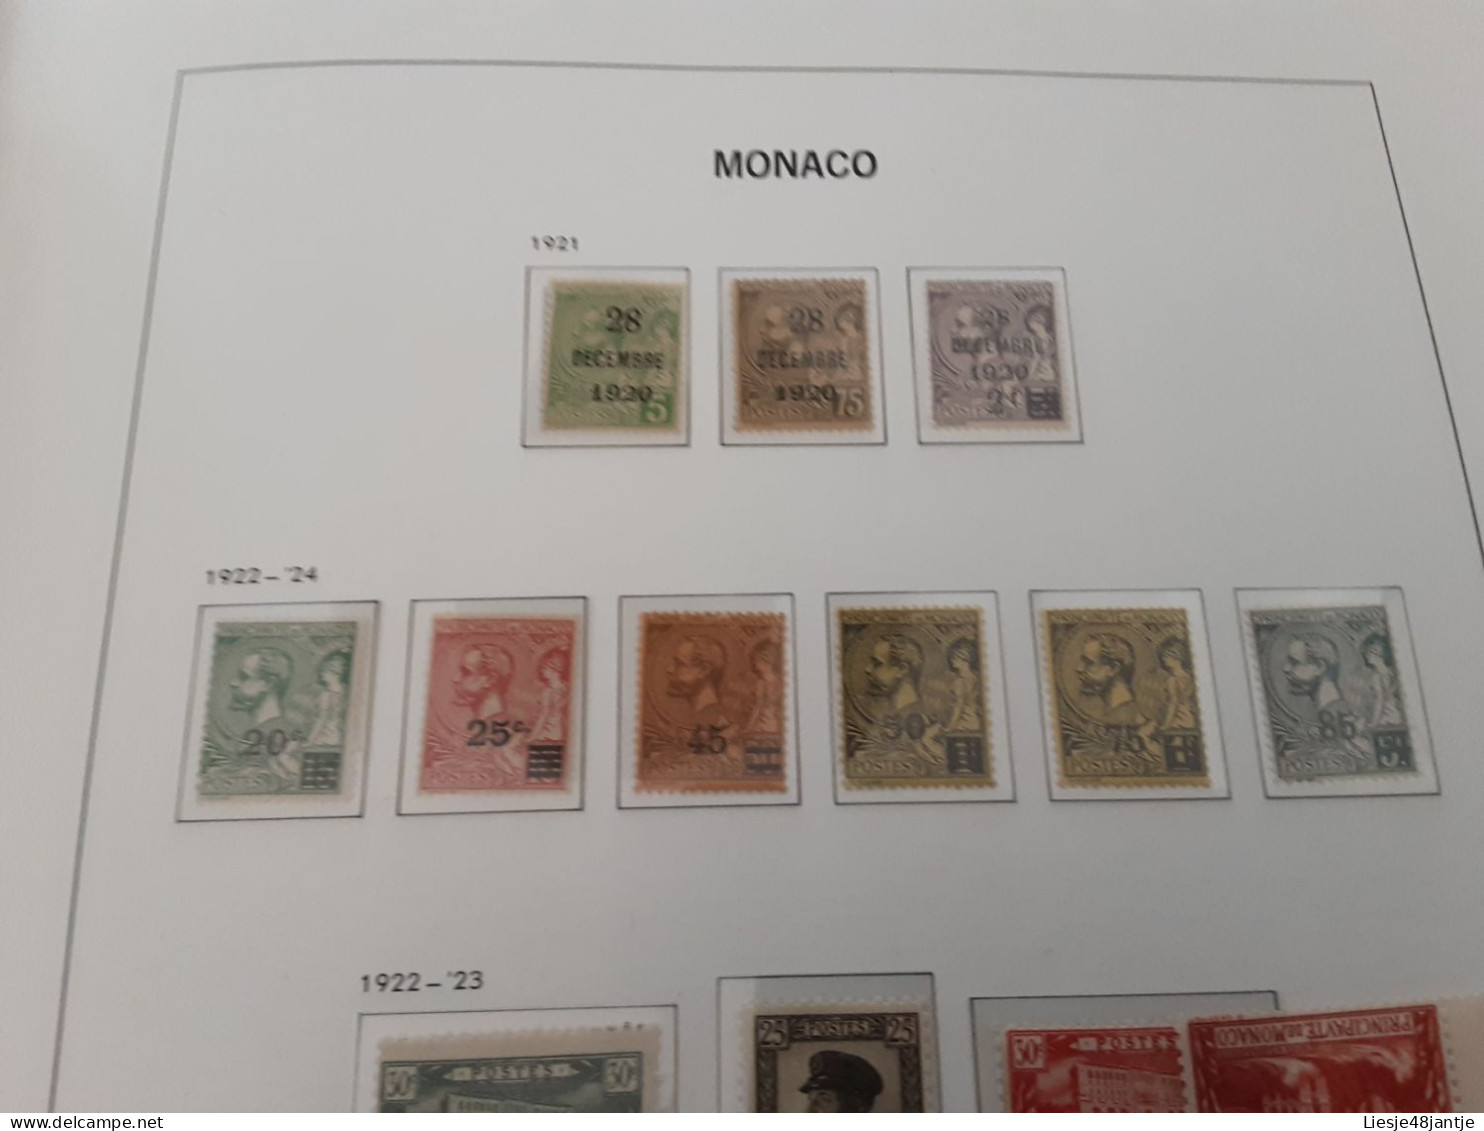 MONACO EXCEPTIONELE COLLECTIE 1885 TOT 2023  XX/X HELEMAAL COMPLEET. ALLES IN 6 DAVO LUX ALBUMS    .